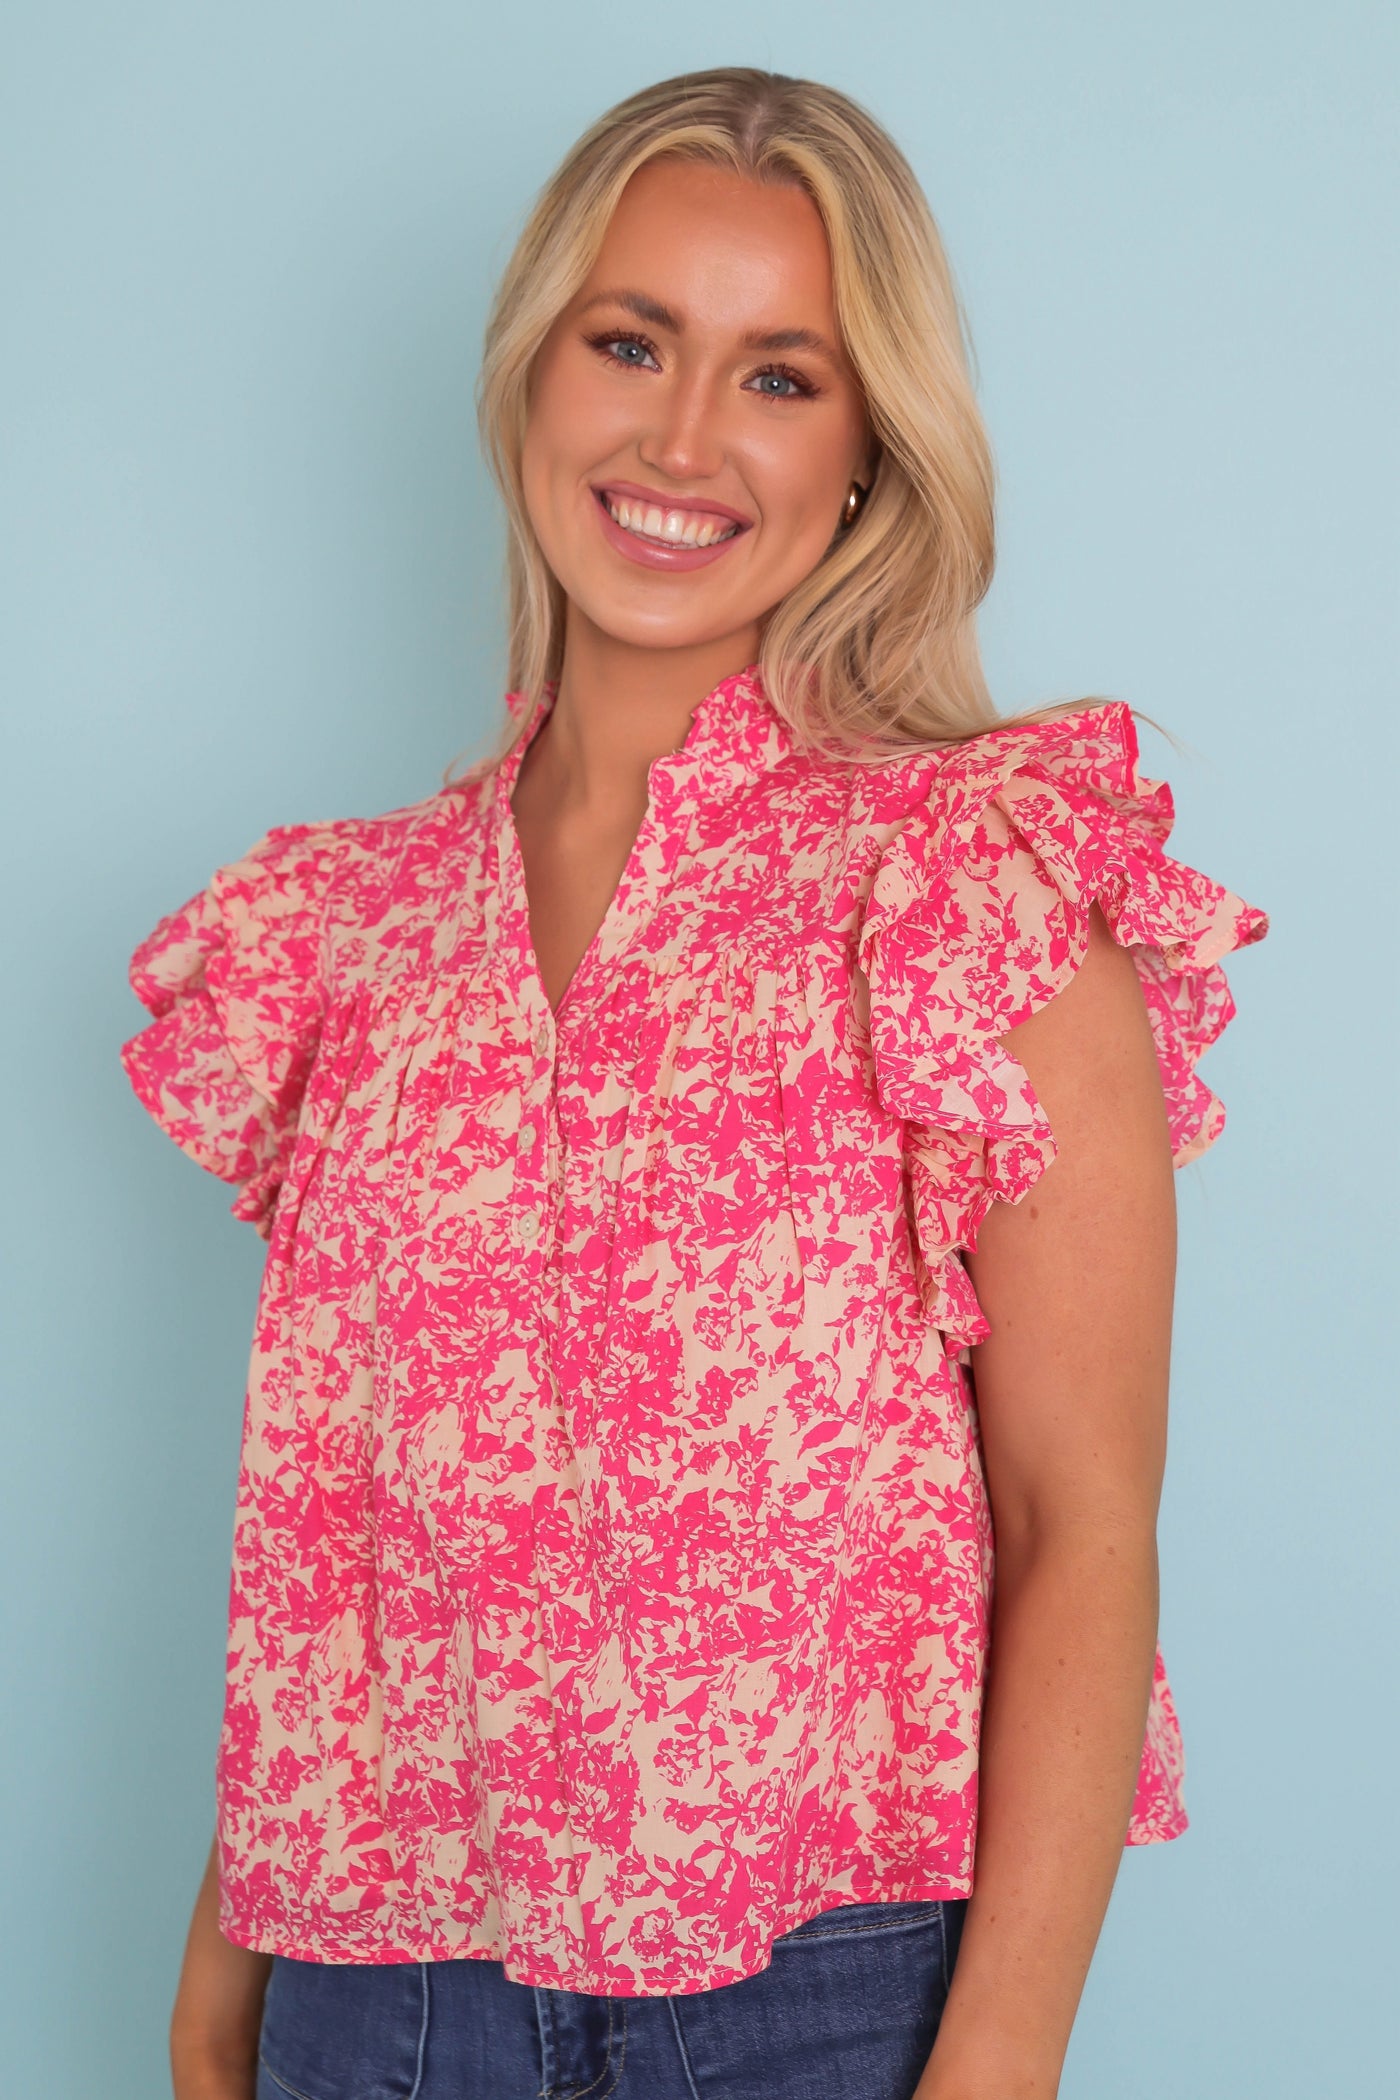 Women's Feminine Print Blouse- Women's Pink Ruffle Top- &Merci Floral Print Blouse